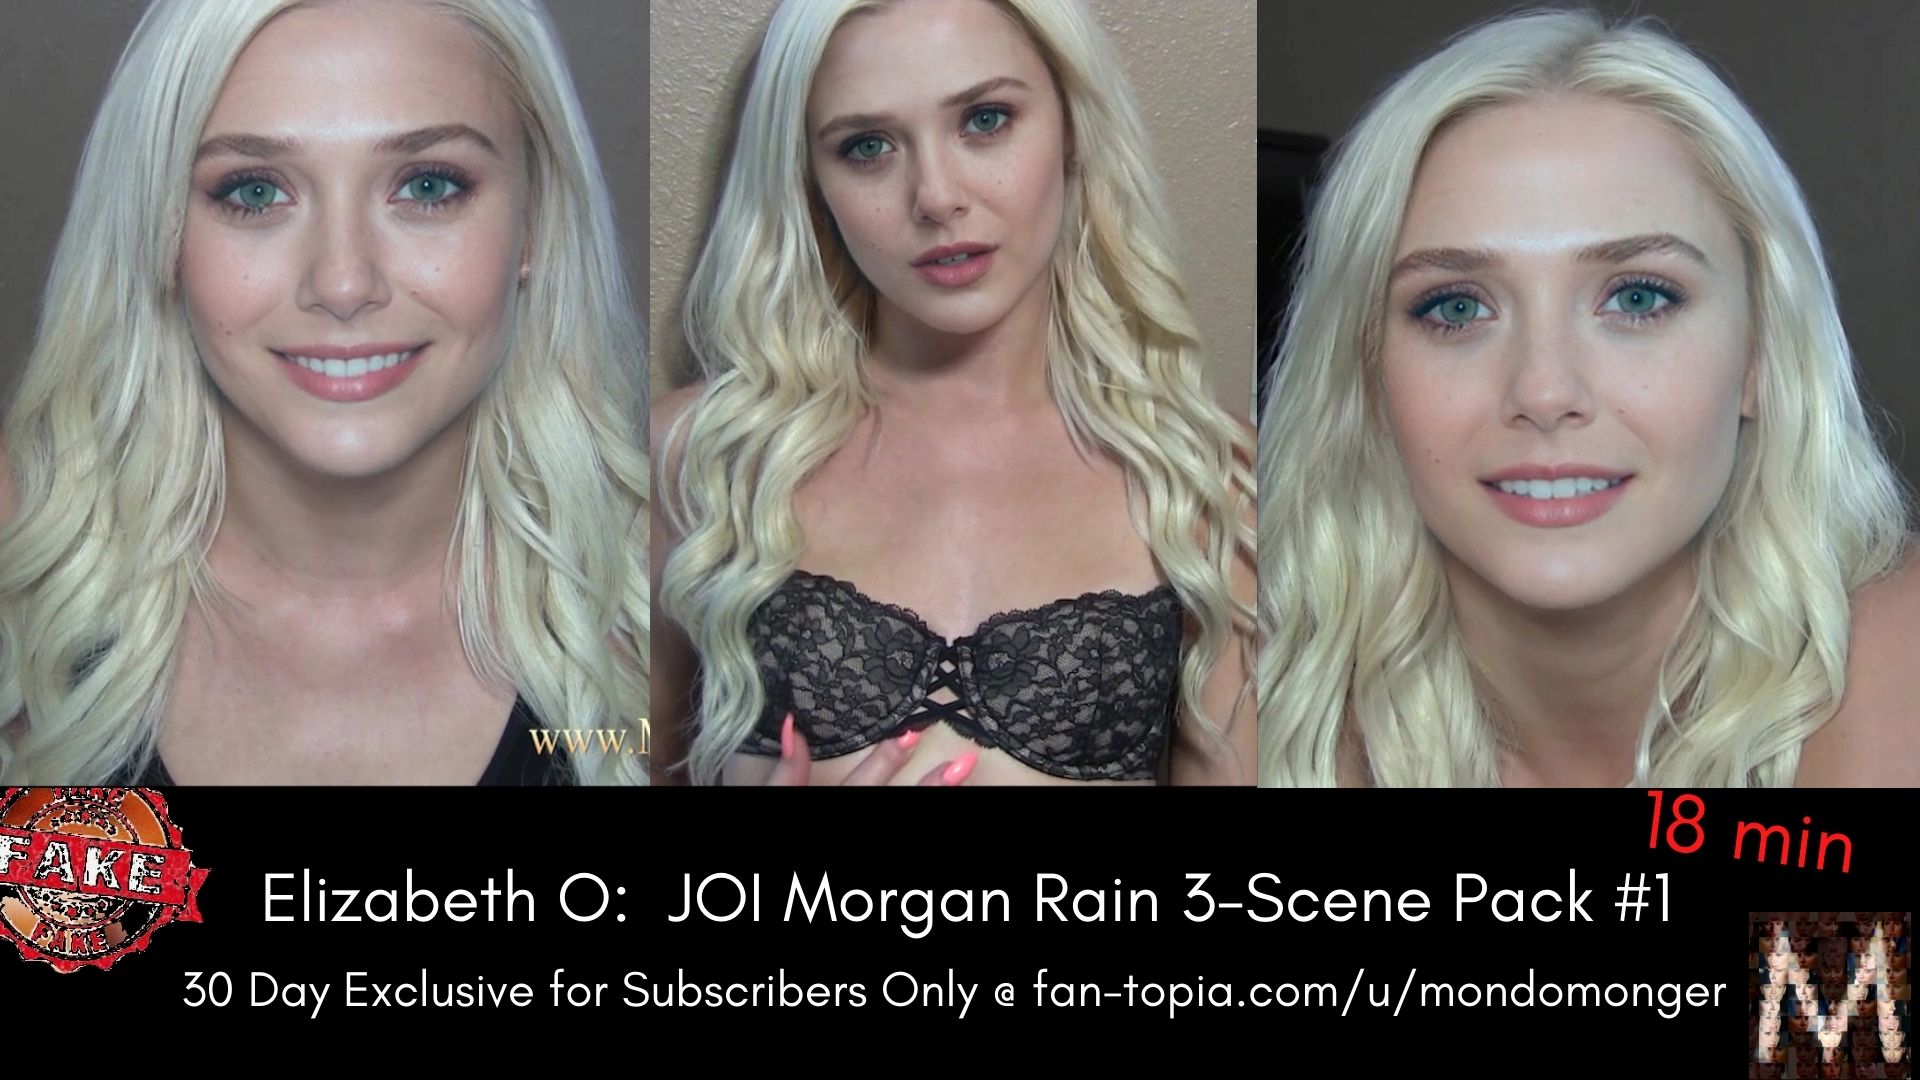 Morgan rain joi